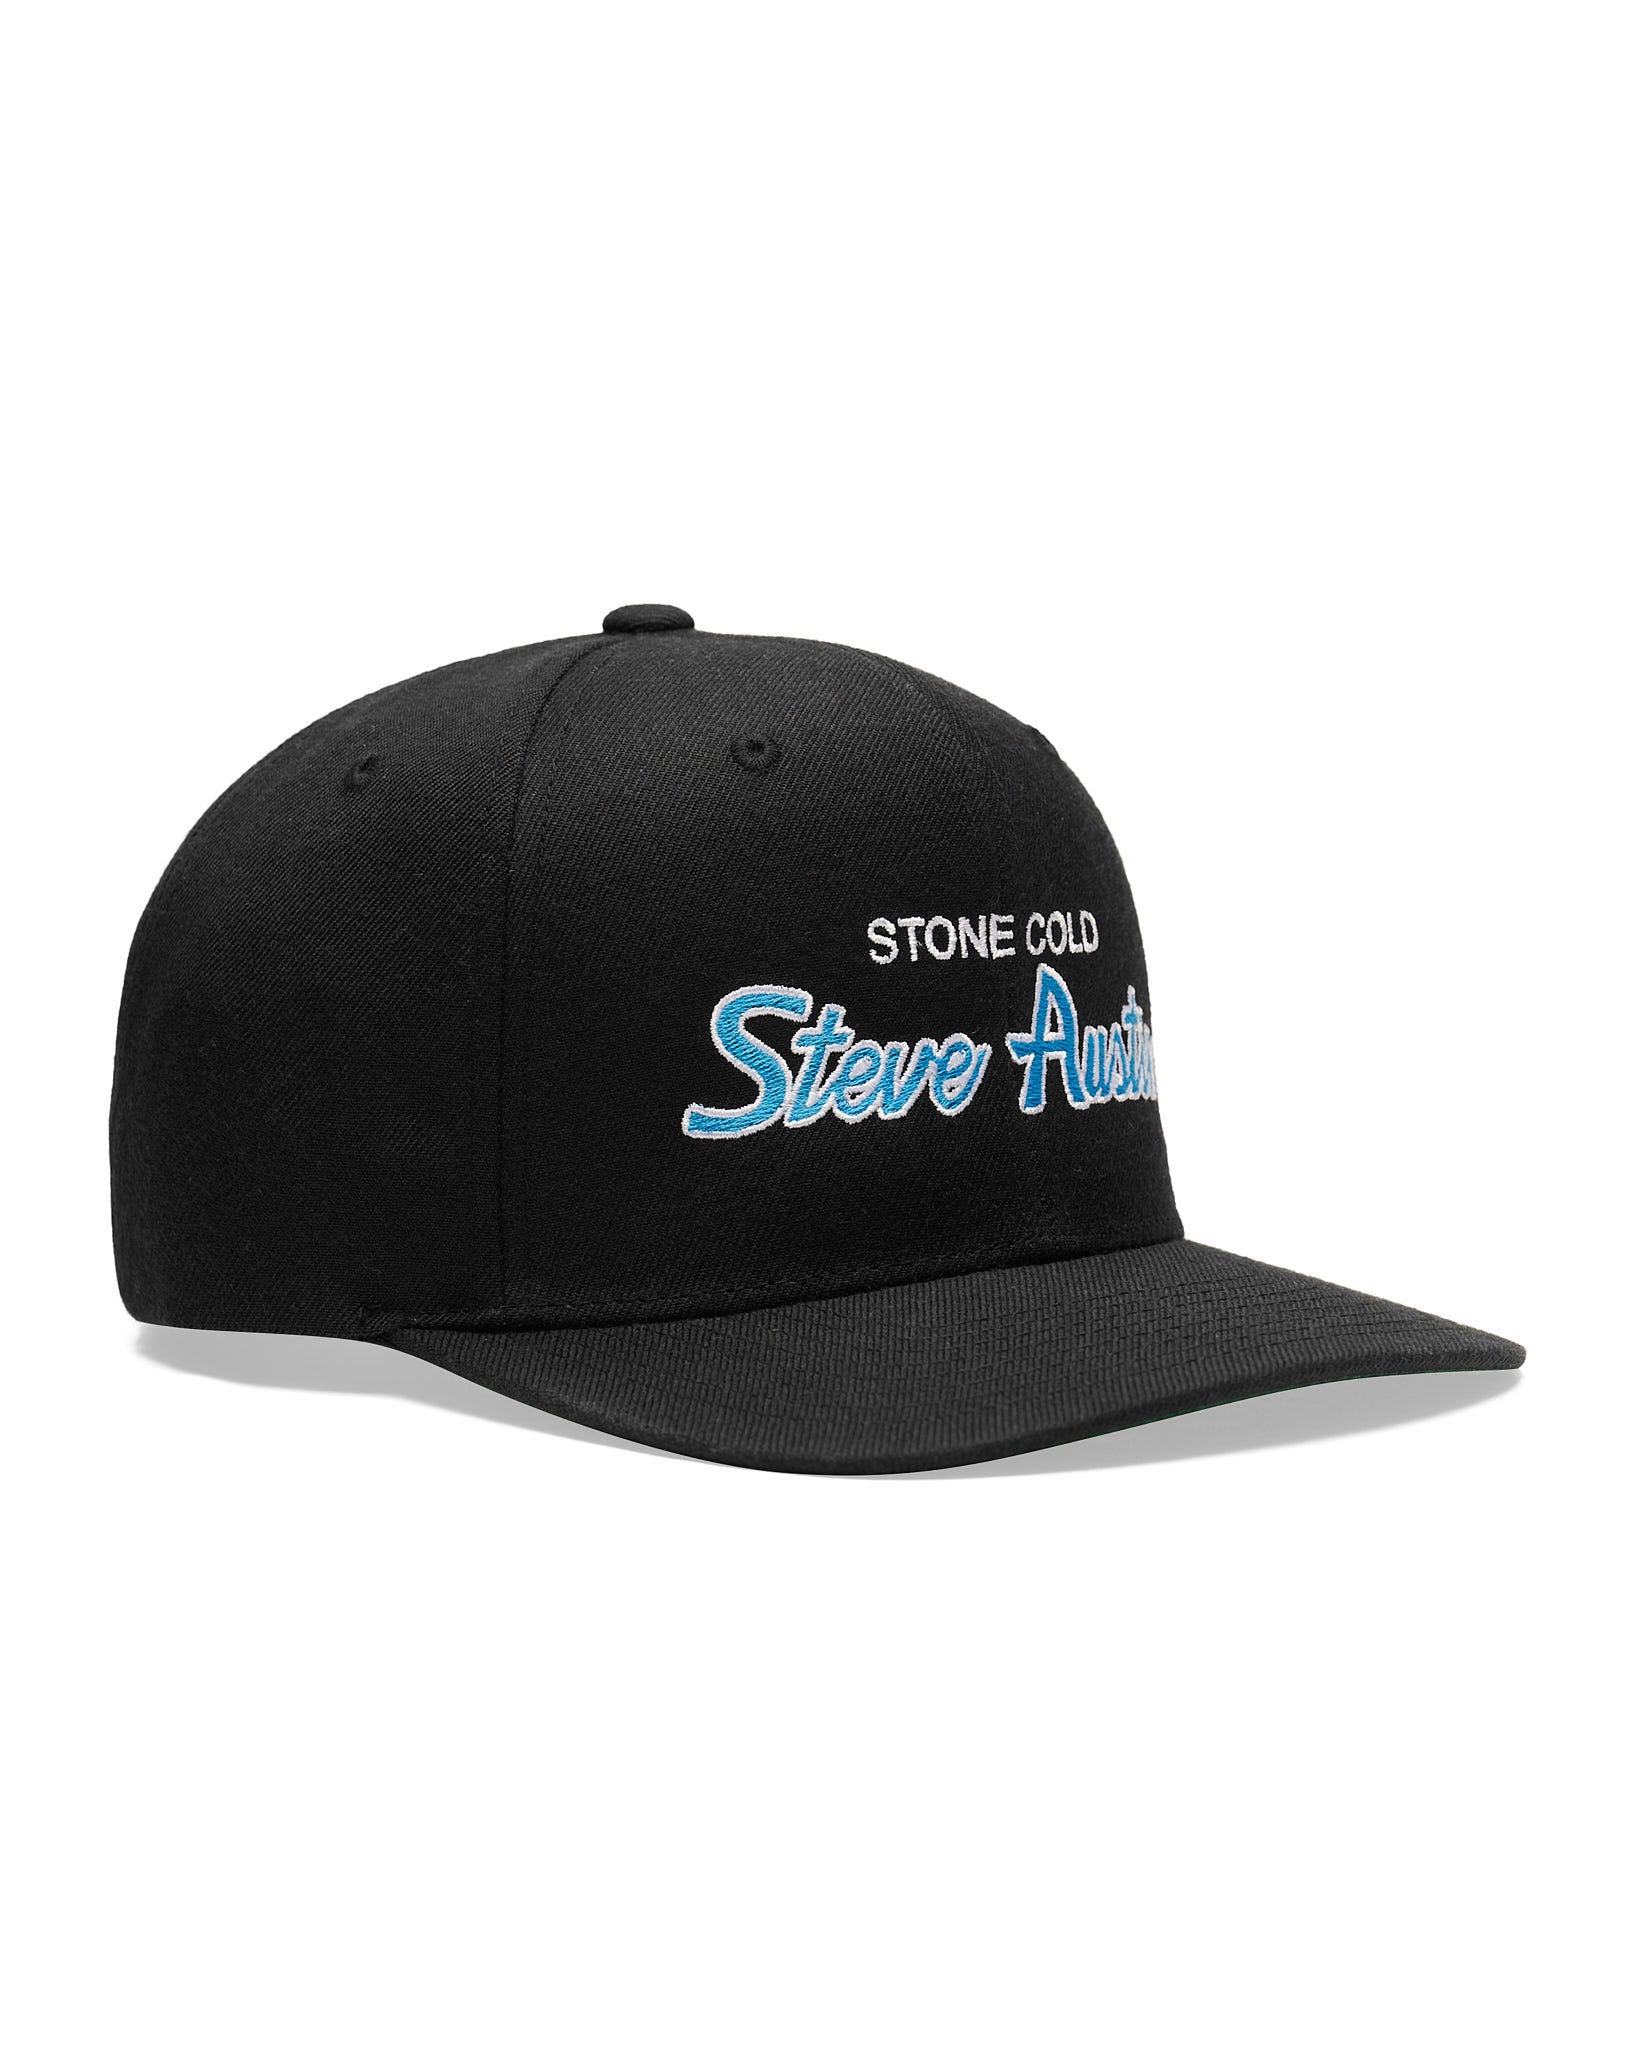 Stone Cold Steve Austin Script Snapback Hat